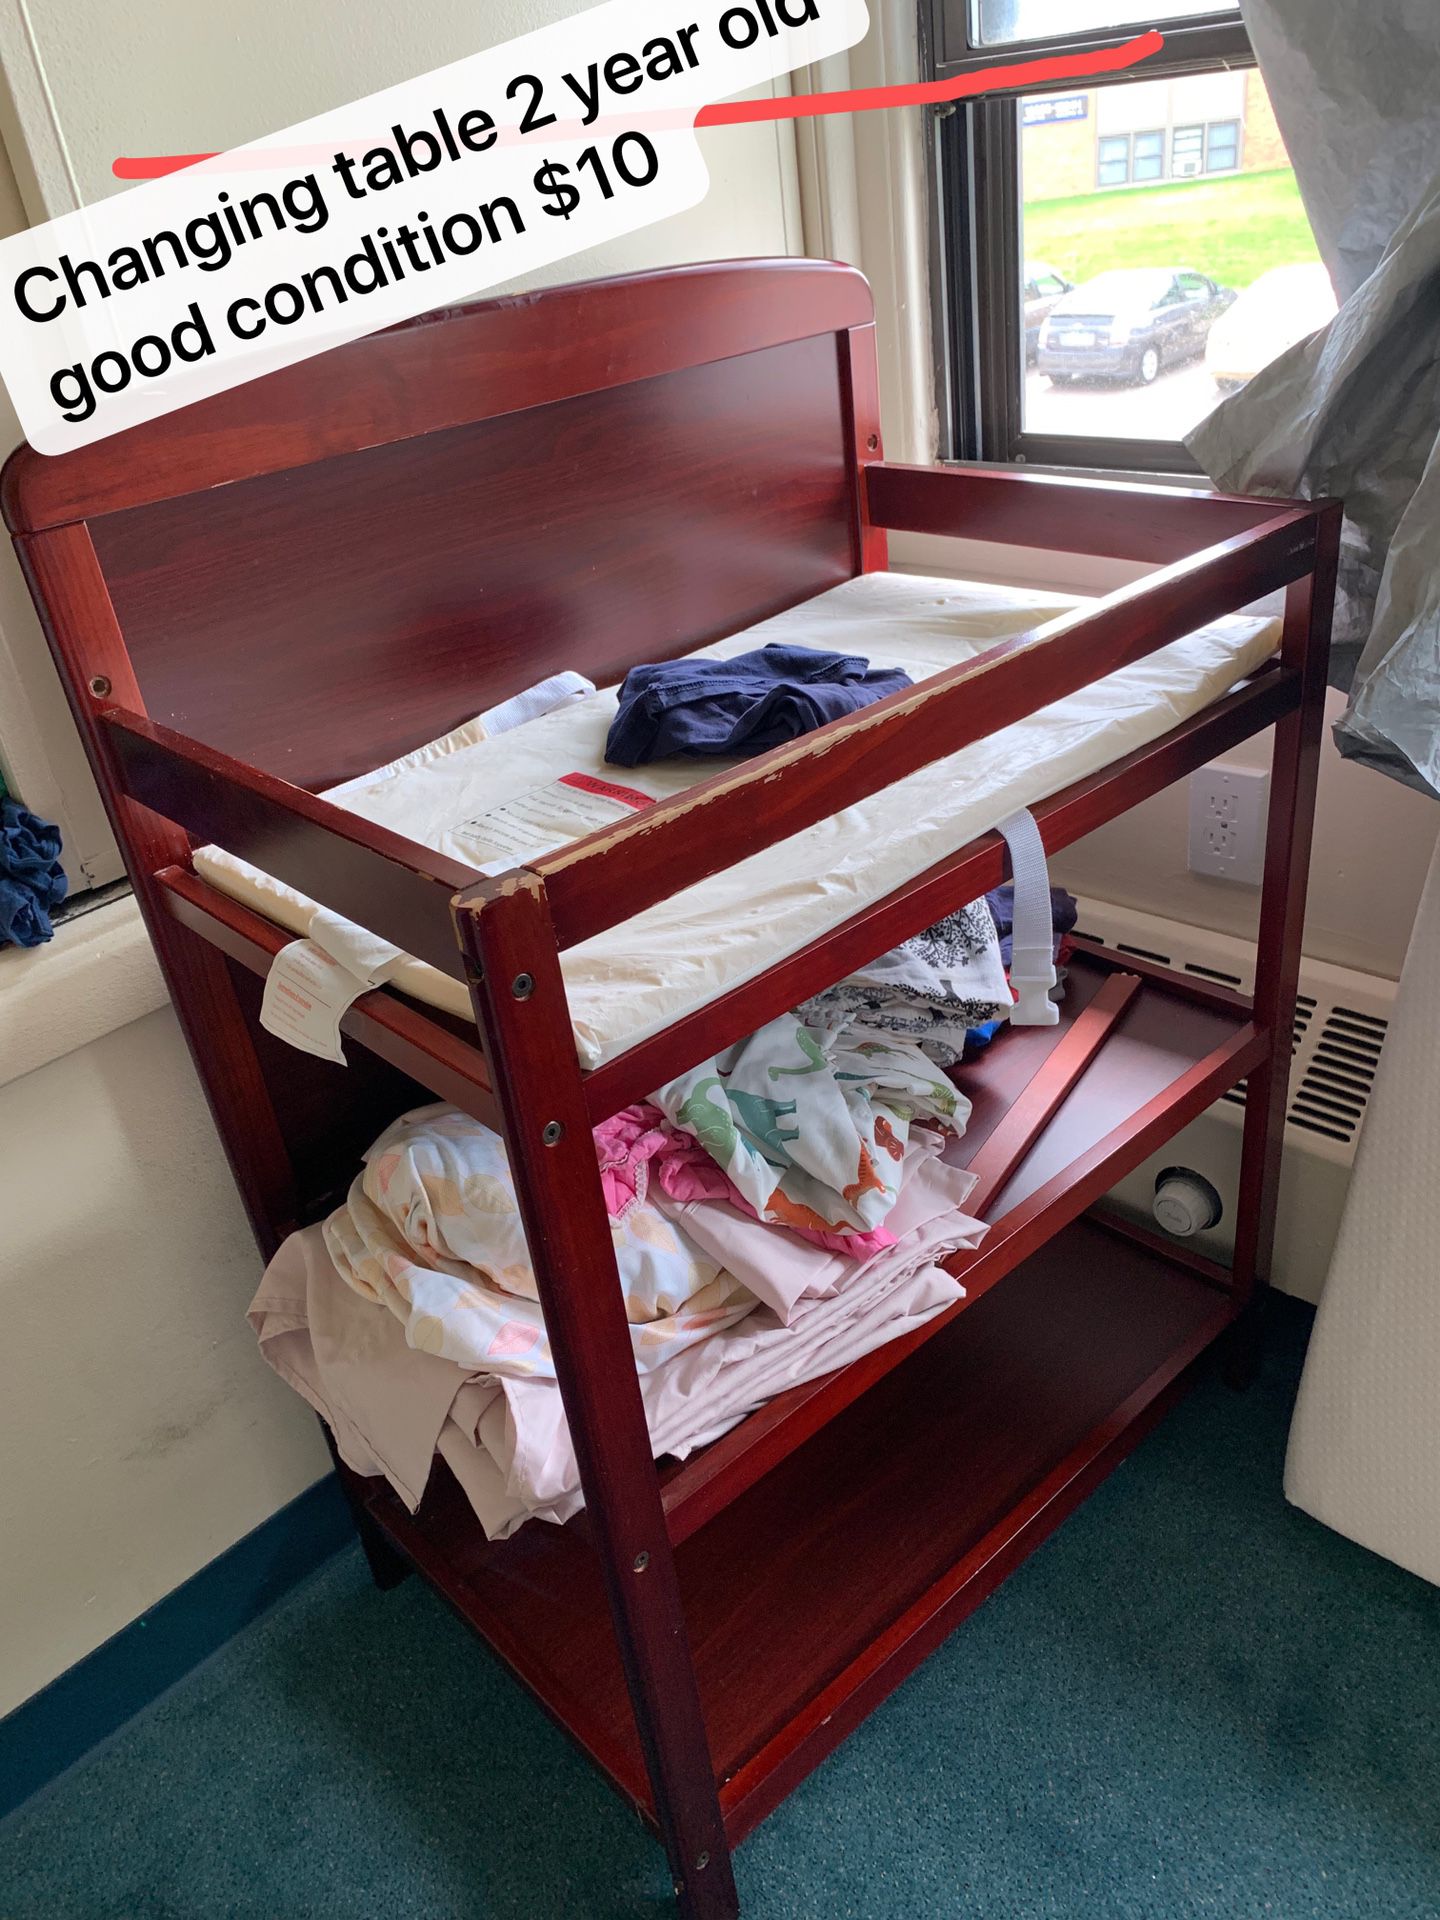 Changing table,crib mattress